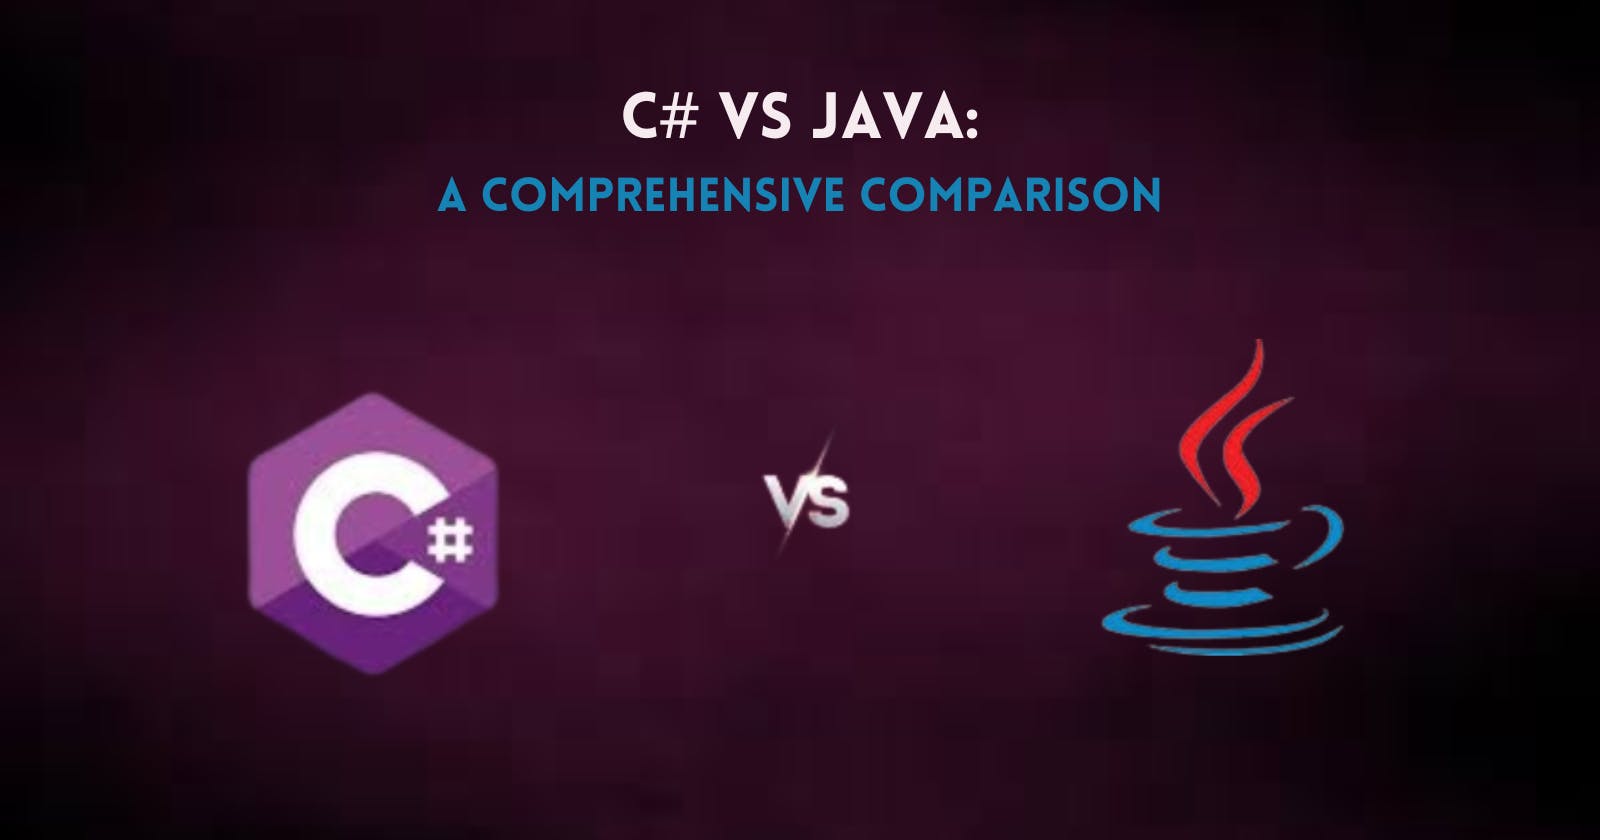 C# vs Java: A Comprehensive Comparison